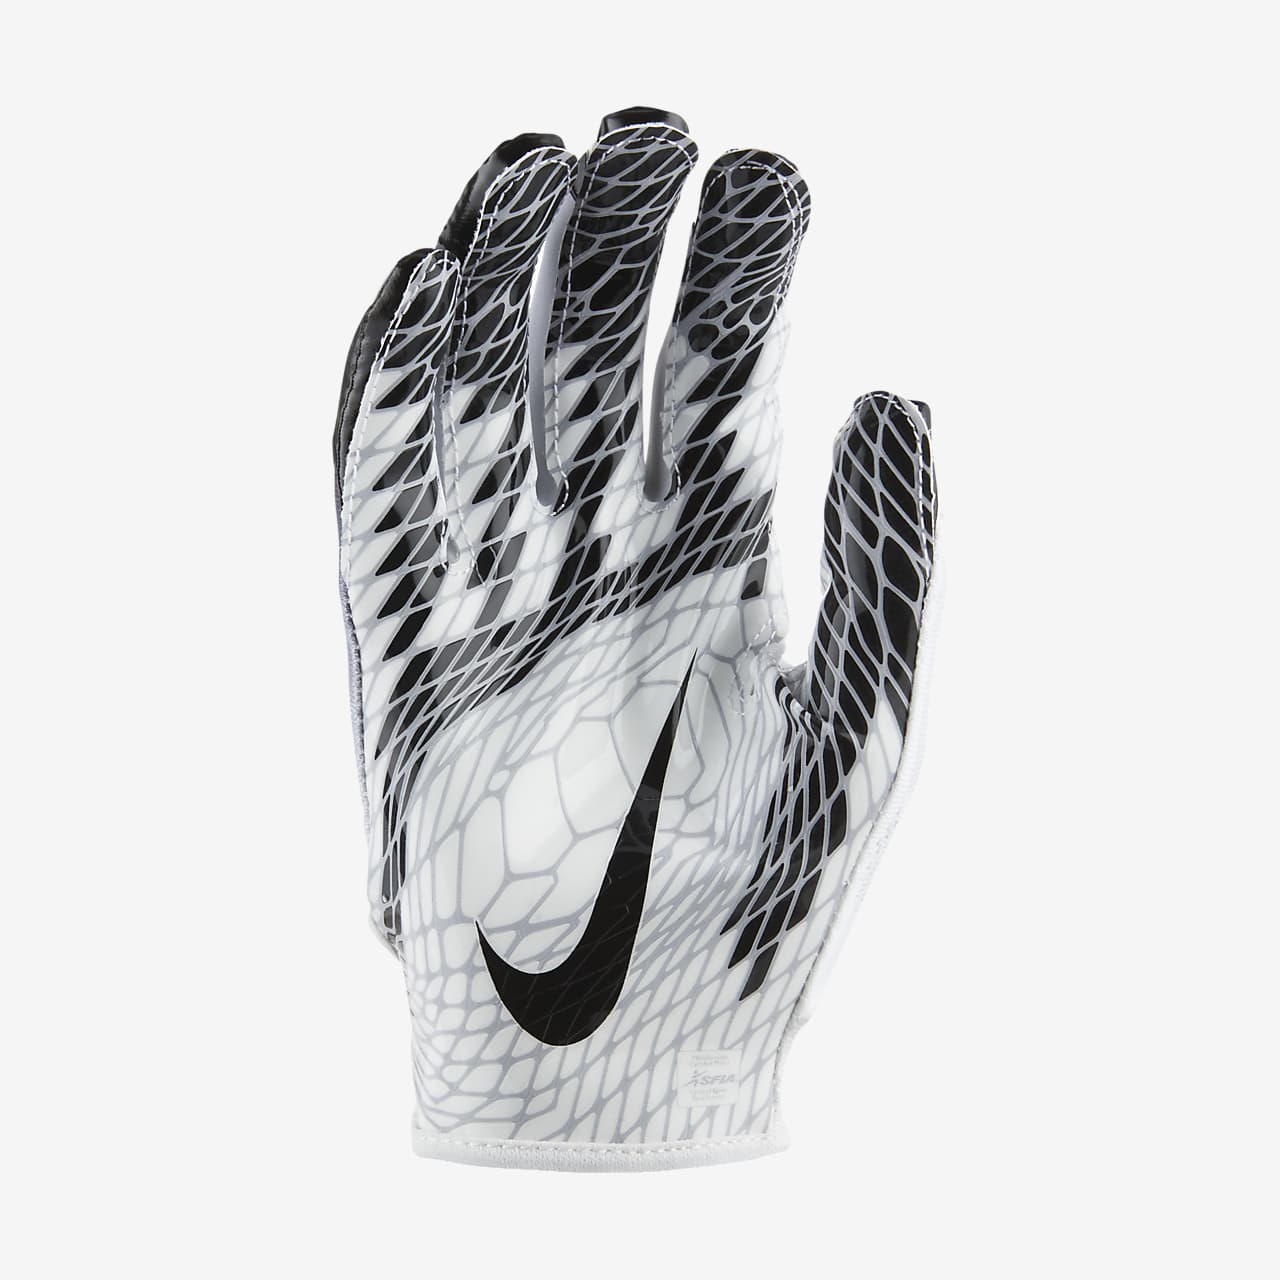 Nike Vapor Knit 2.0 Football Gloves 